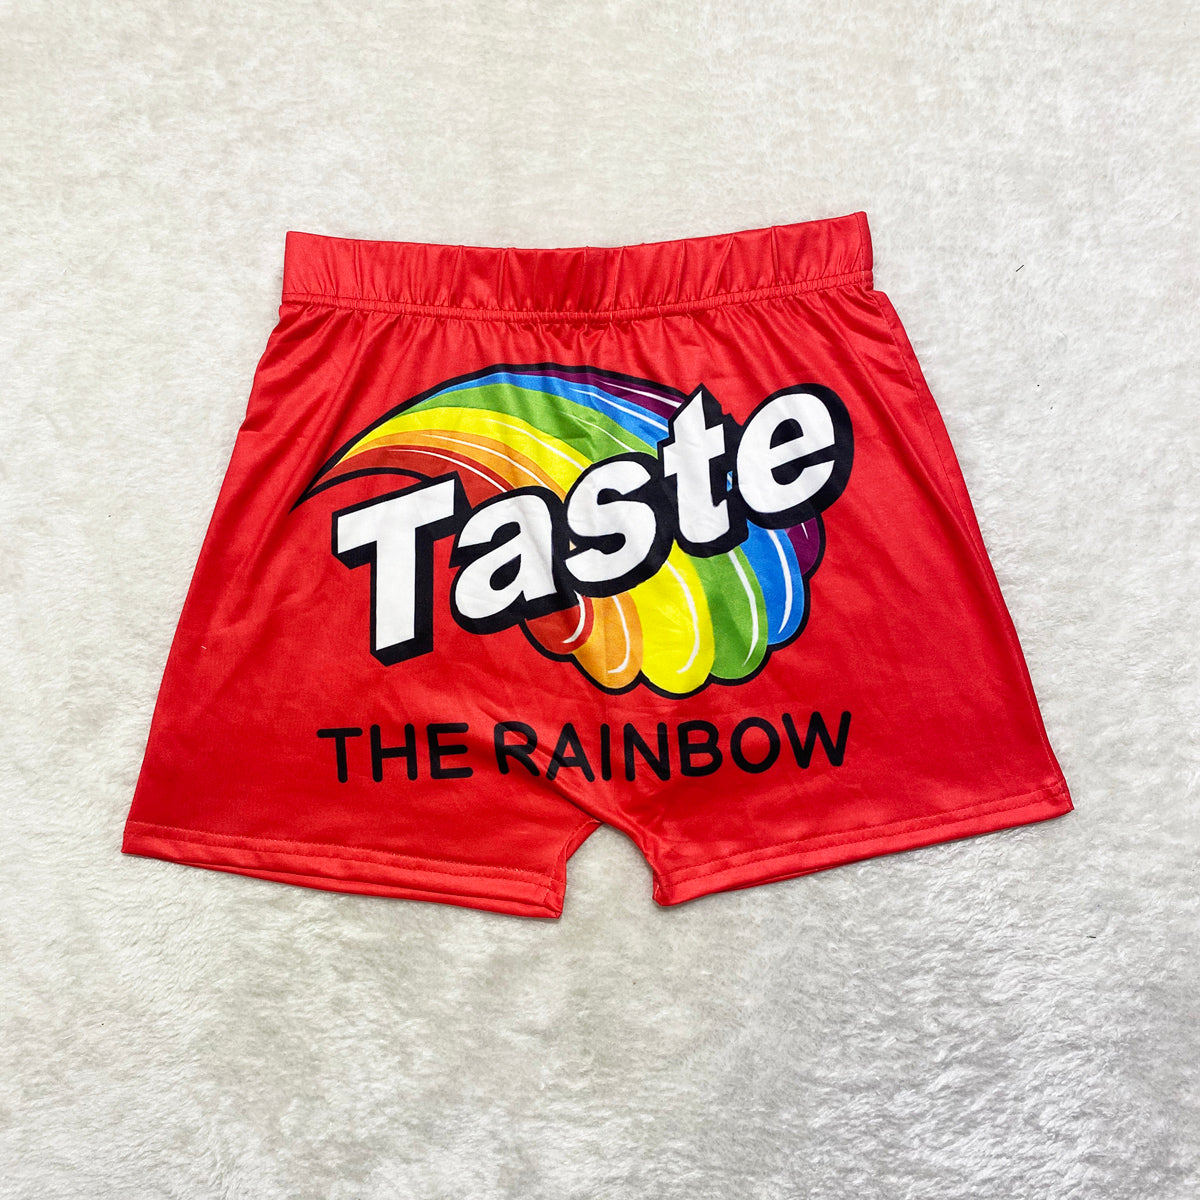 “Taste the Rainbow” Shorts